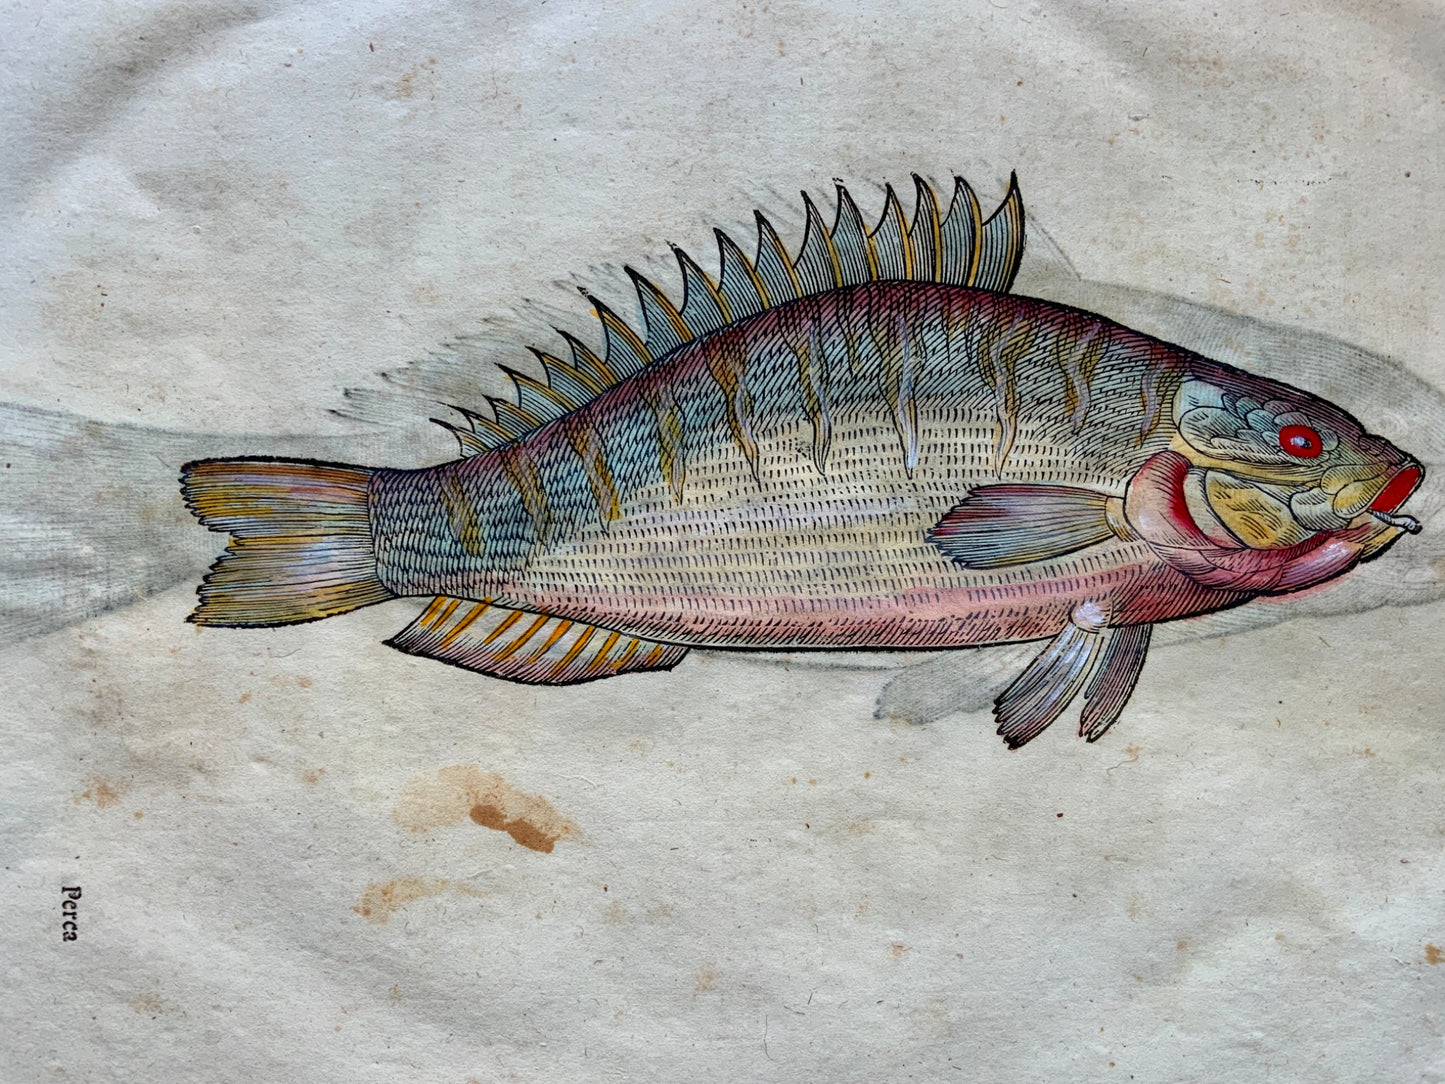 Coriolano; Aldrovandi - 2 Large folio woodcut leaf - PERCH Fish - Handcol - 1638